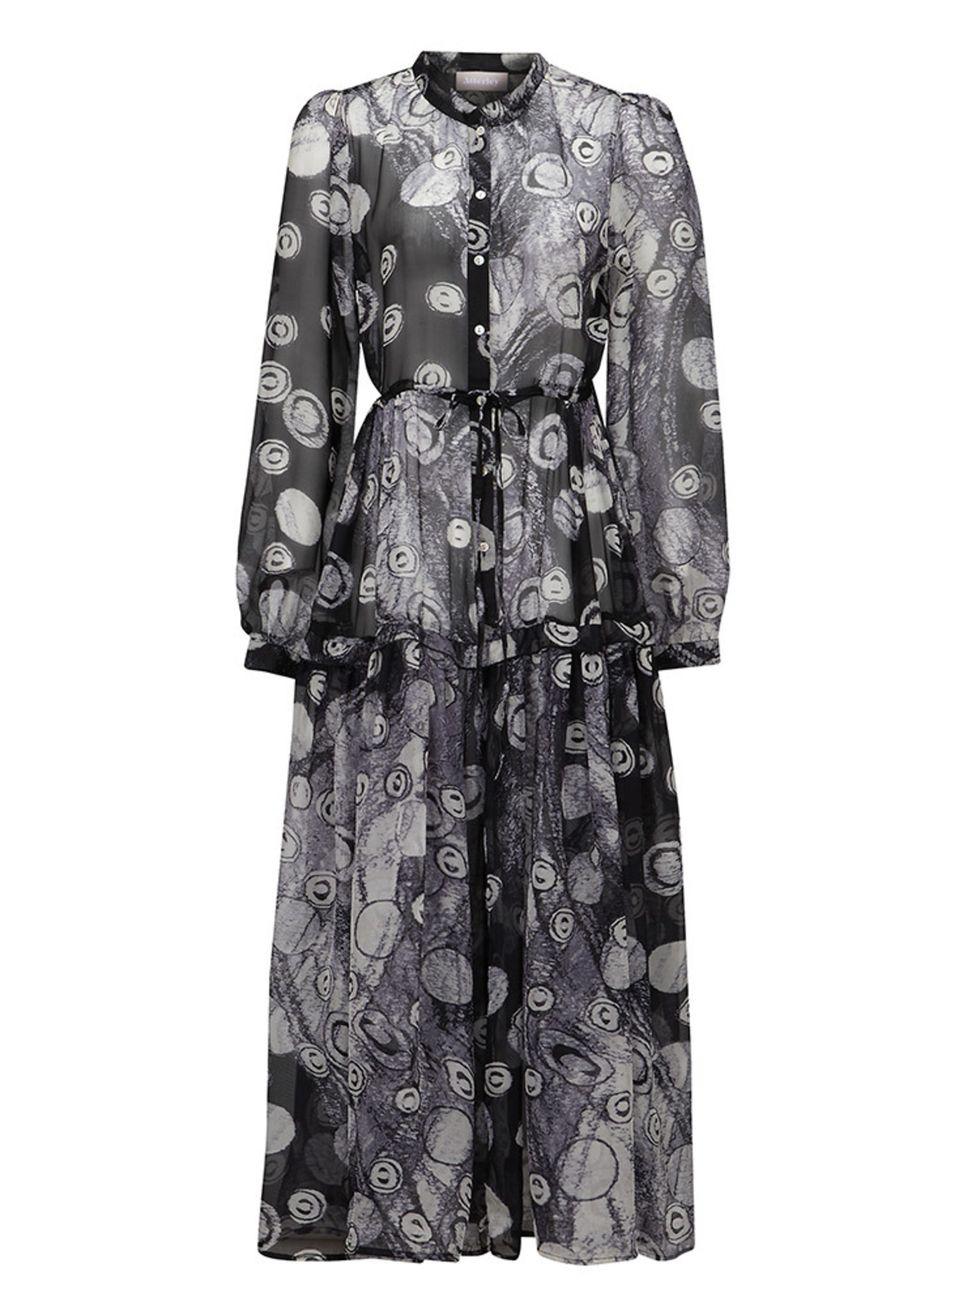 <p><a href="http://www.atterley.com/galaxy-print-maxi-dress.html" target="_blank">Atterley</a> dress, £115 </p>